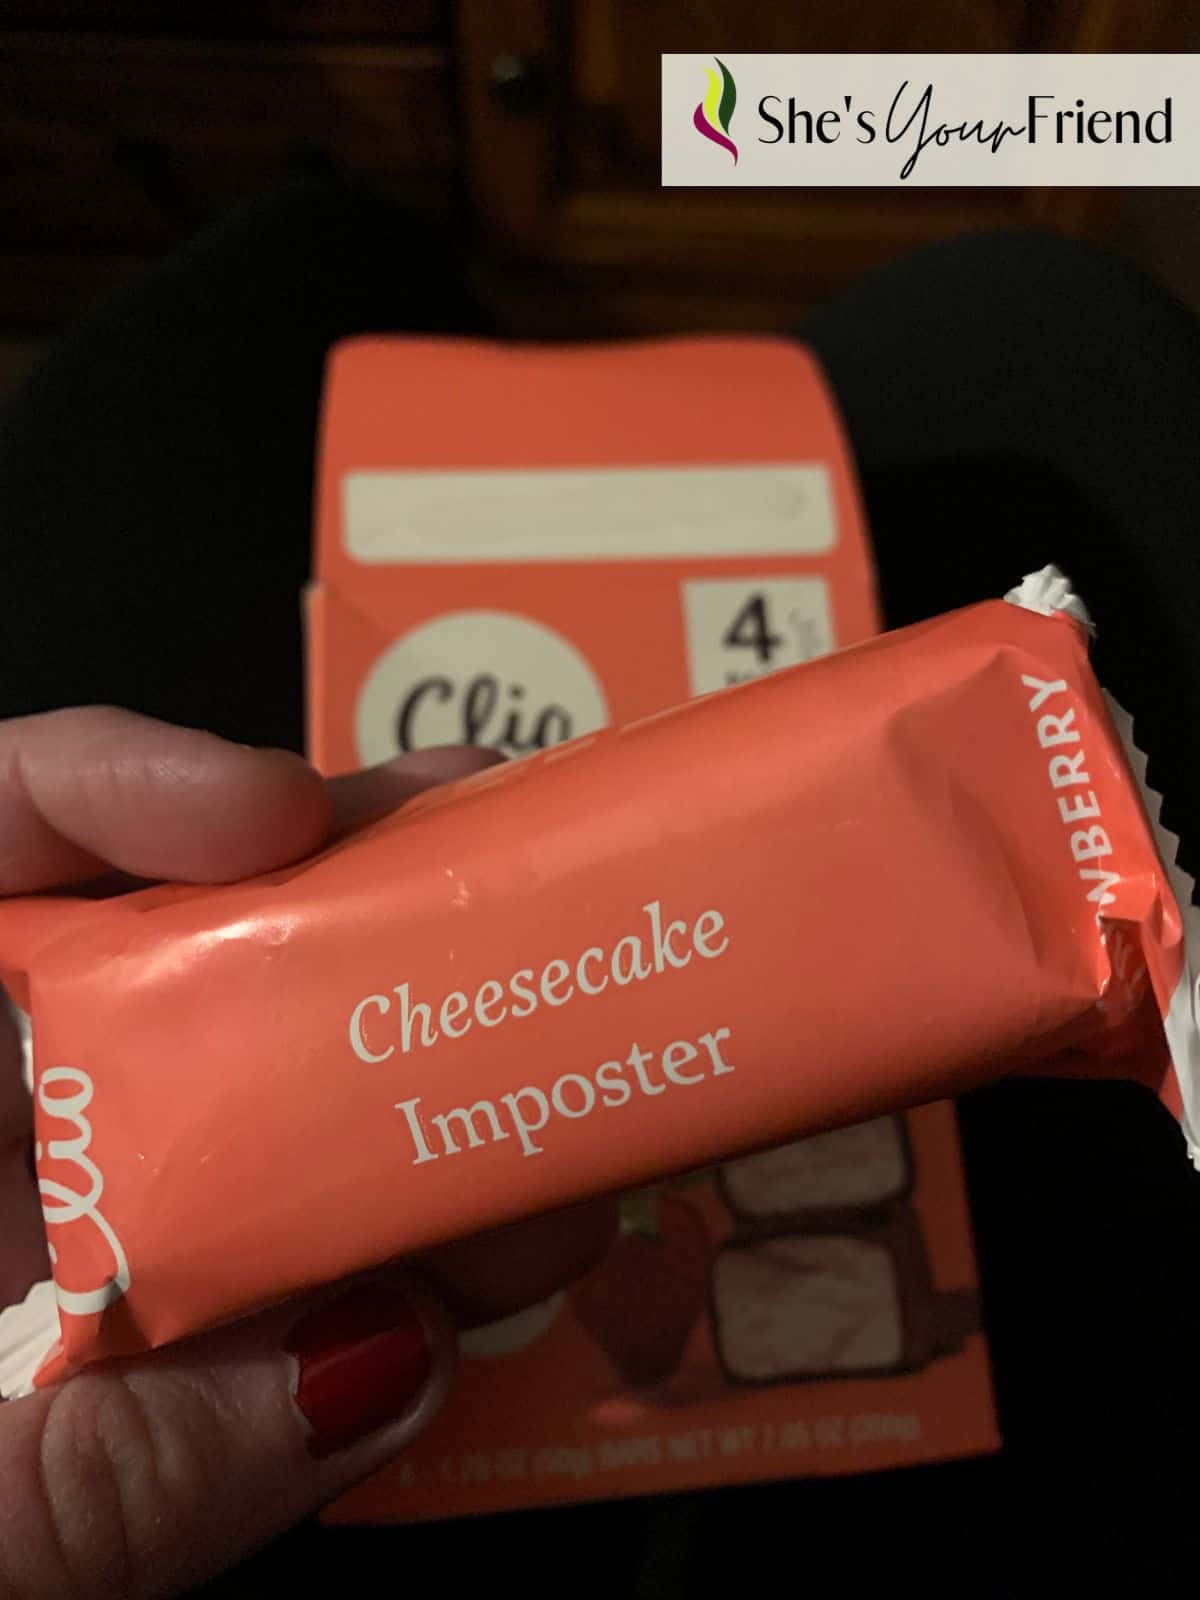 a clio yogurt bar that says cheesecake imposter